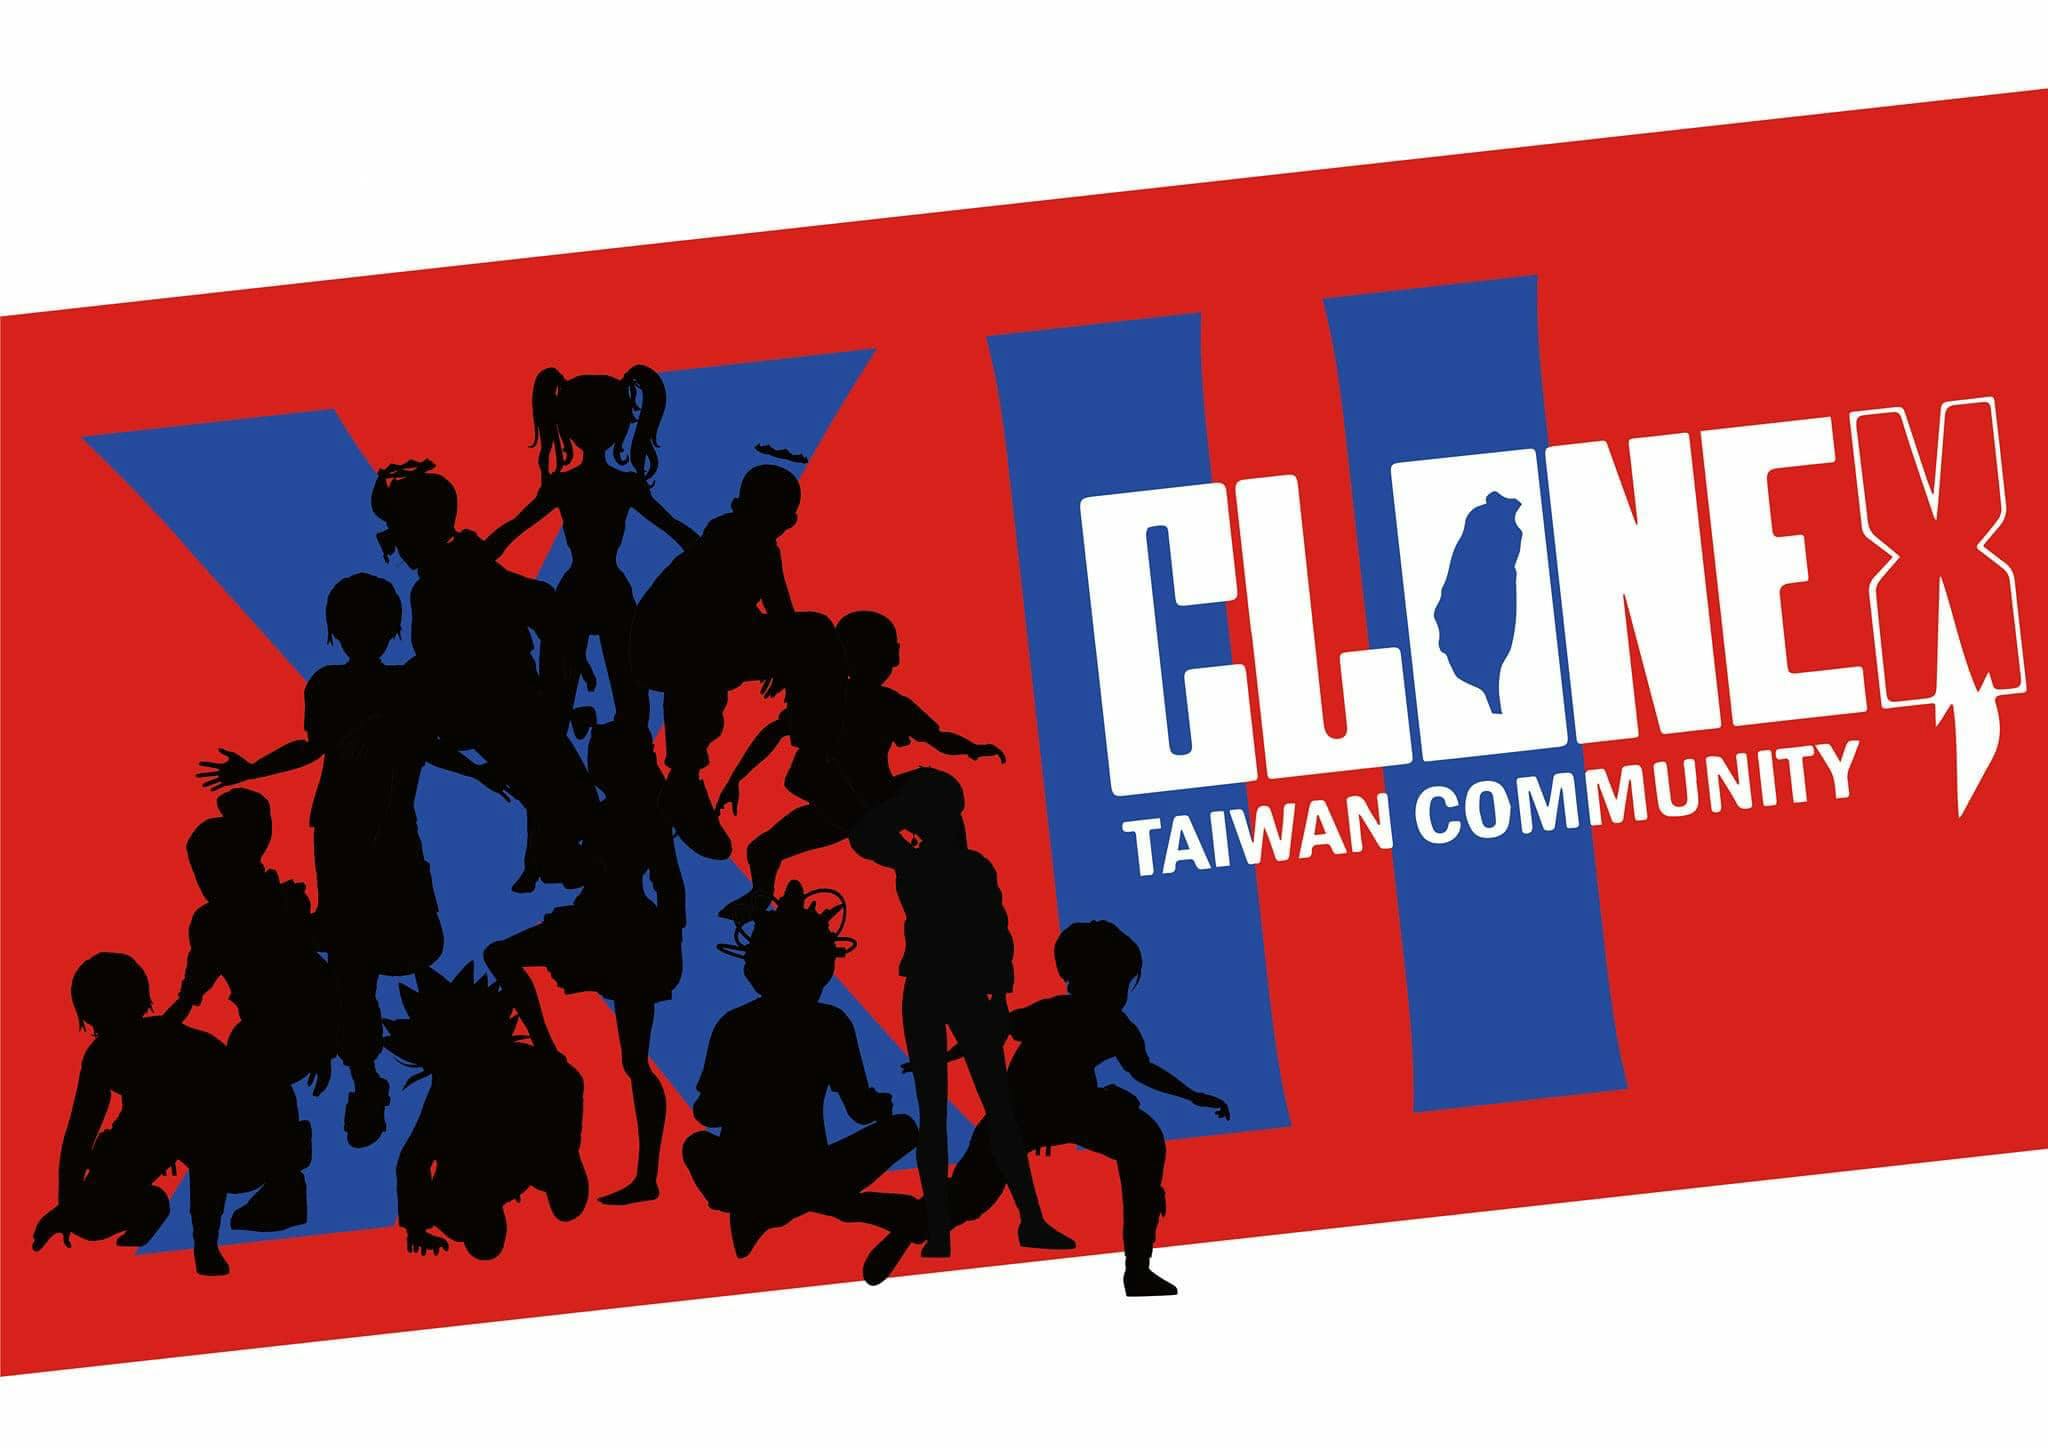 CloneX 在台灣的十二名成員組成了「十二使徒」主導社群活動。